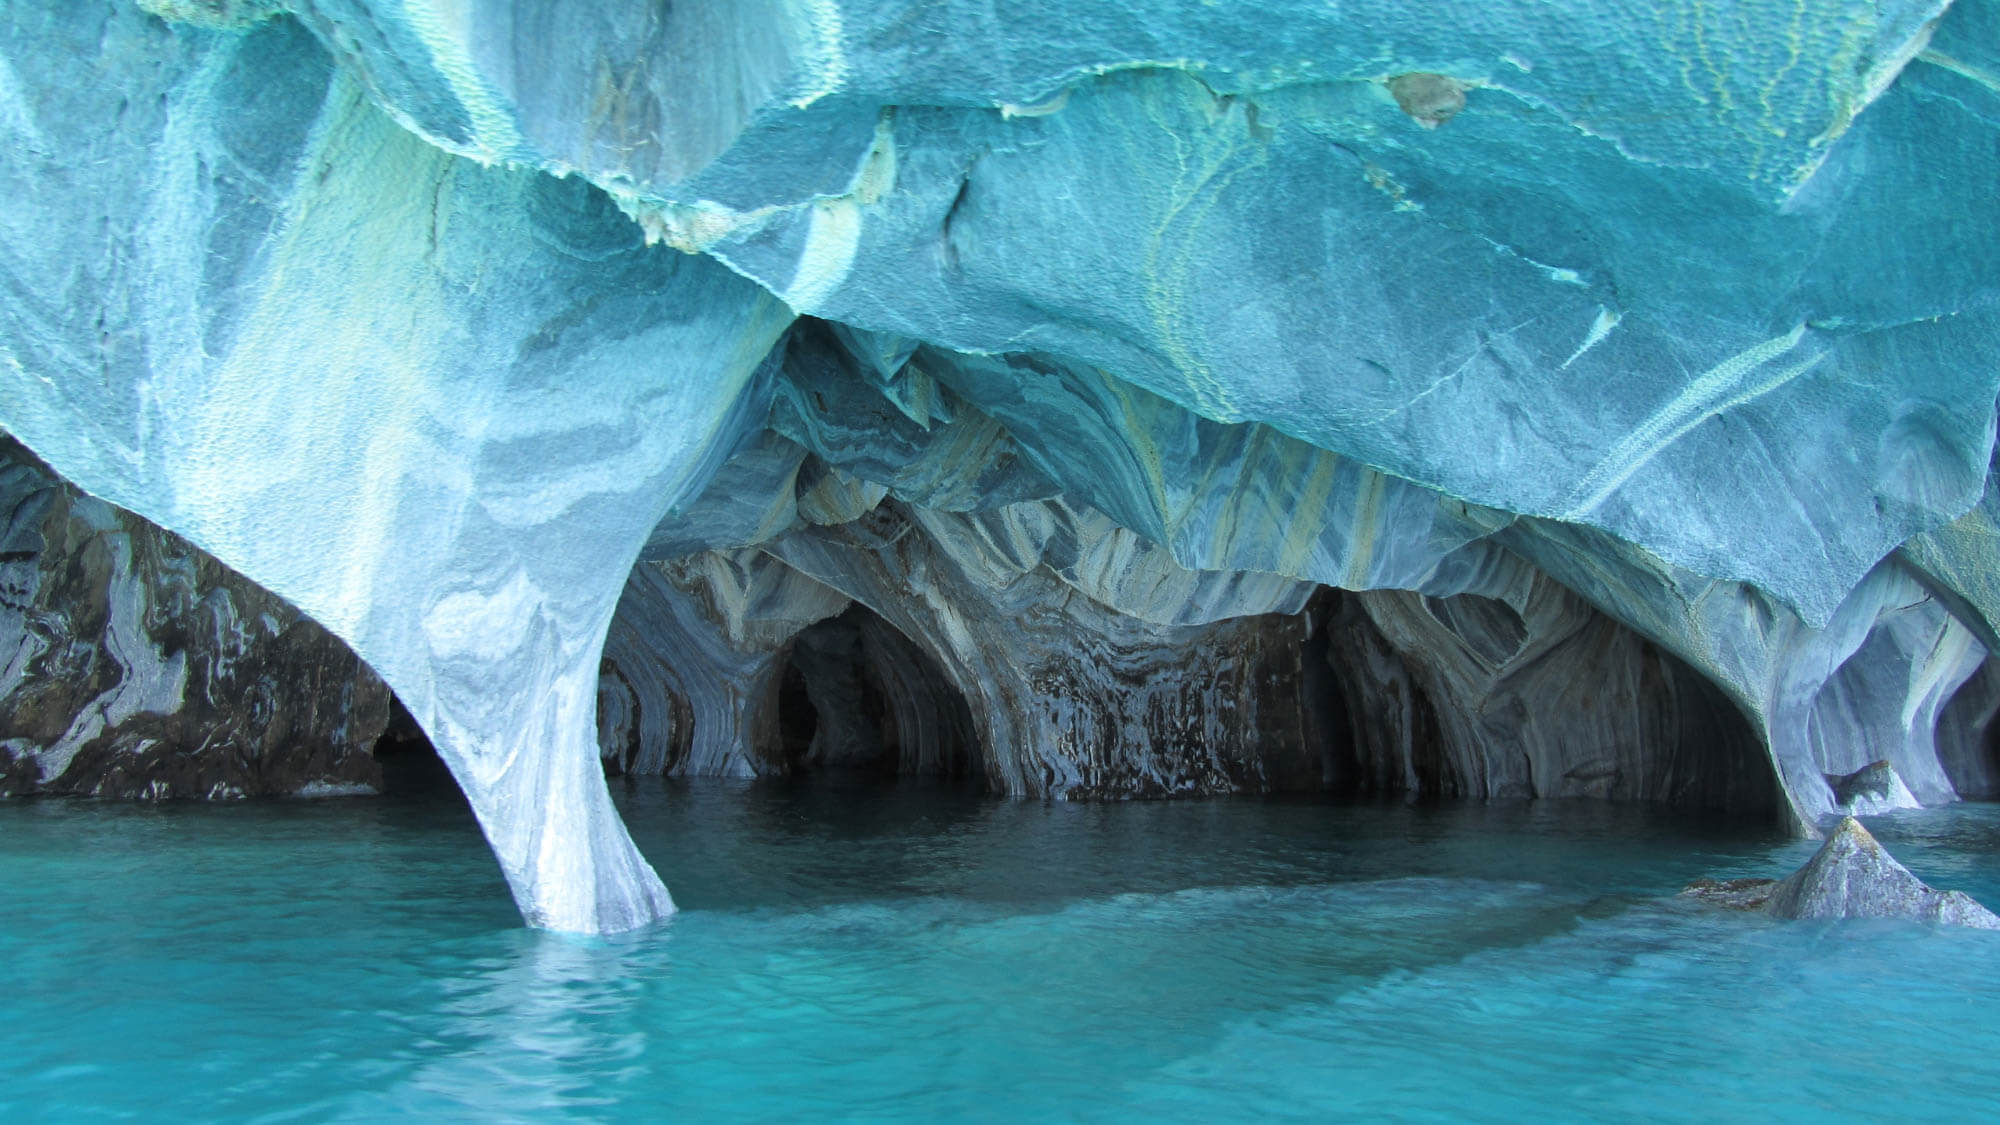 Visit Marble Caves